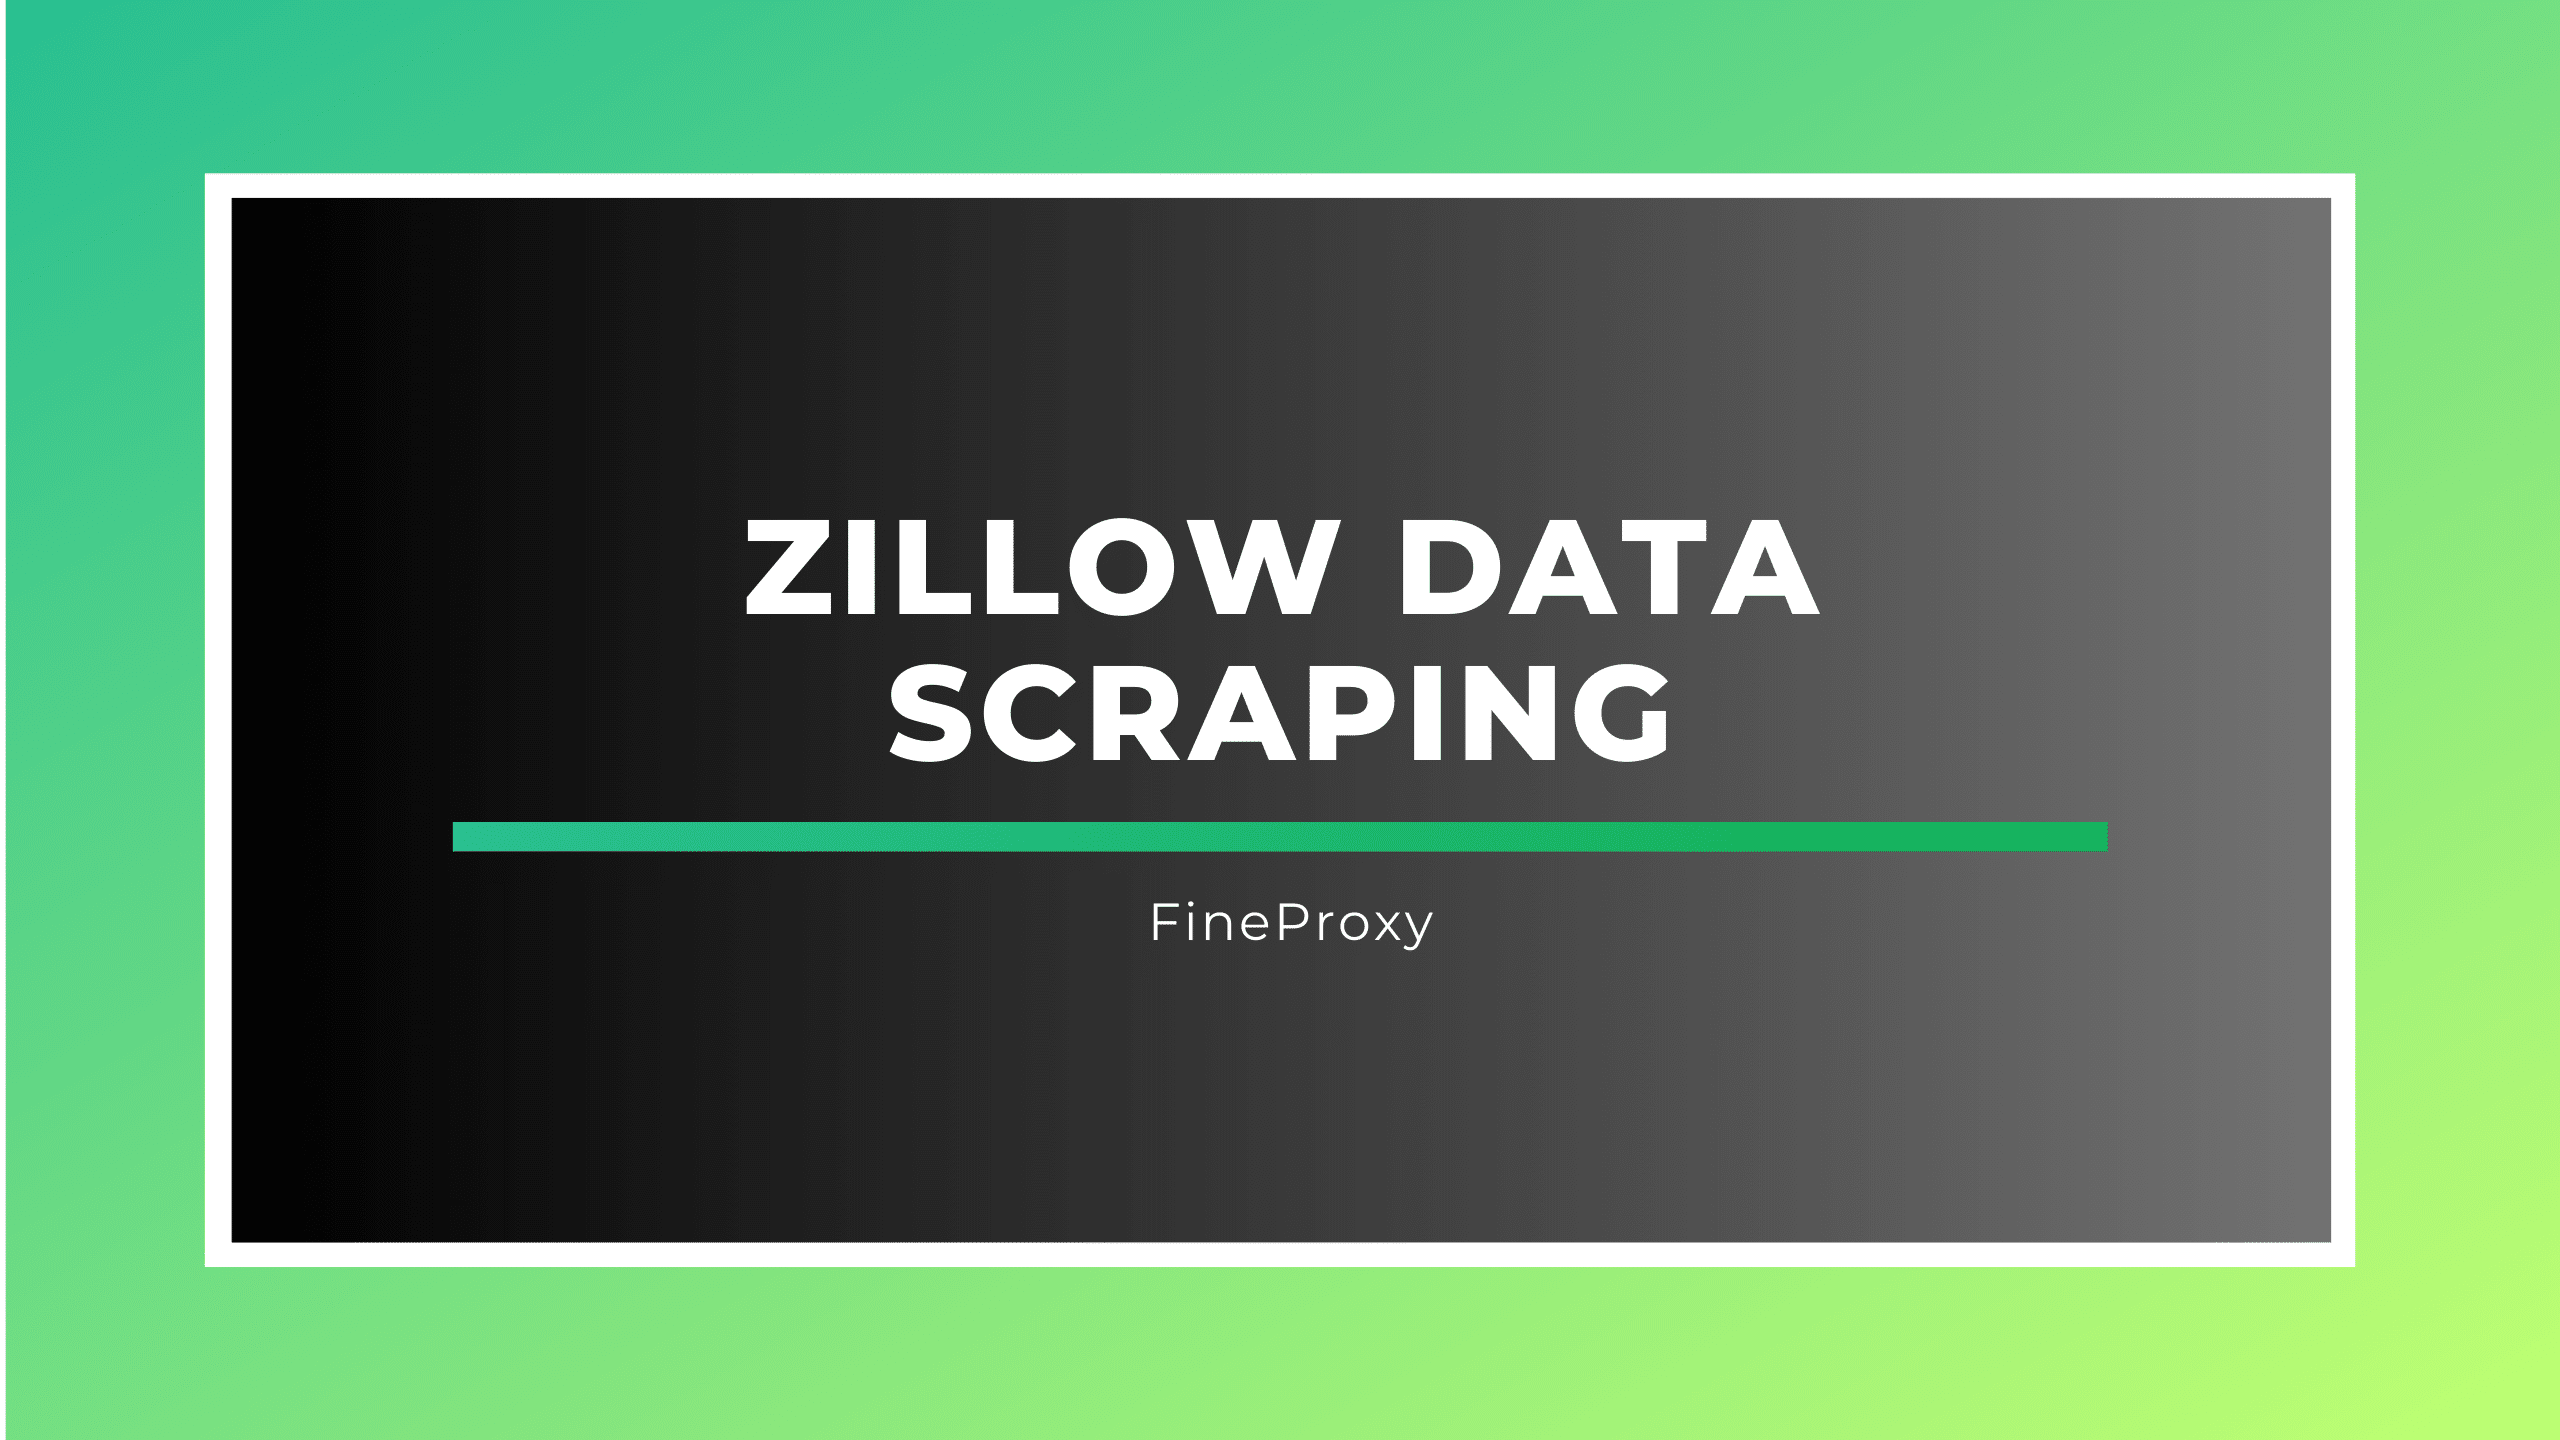 Zillow Data Scraping